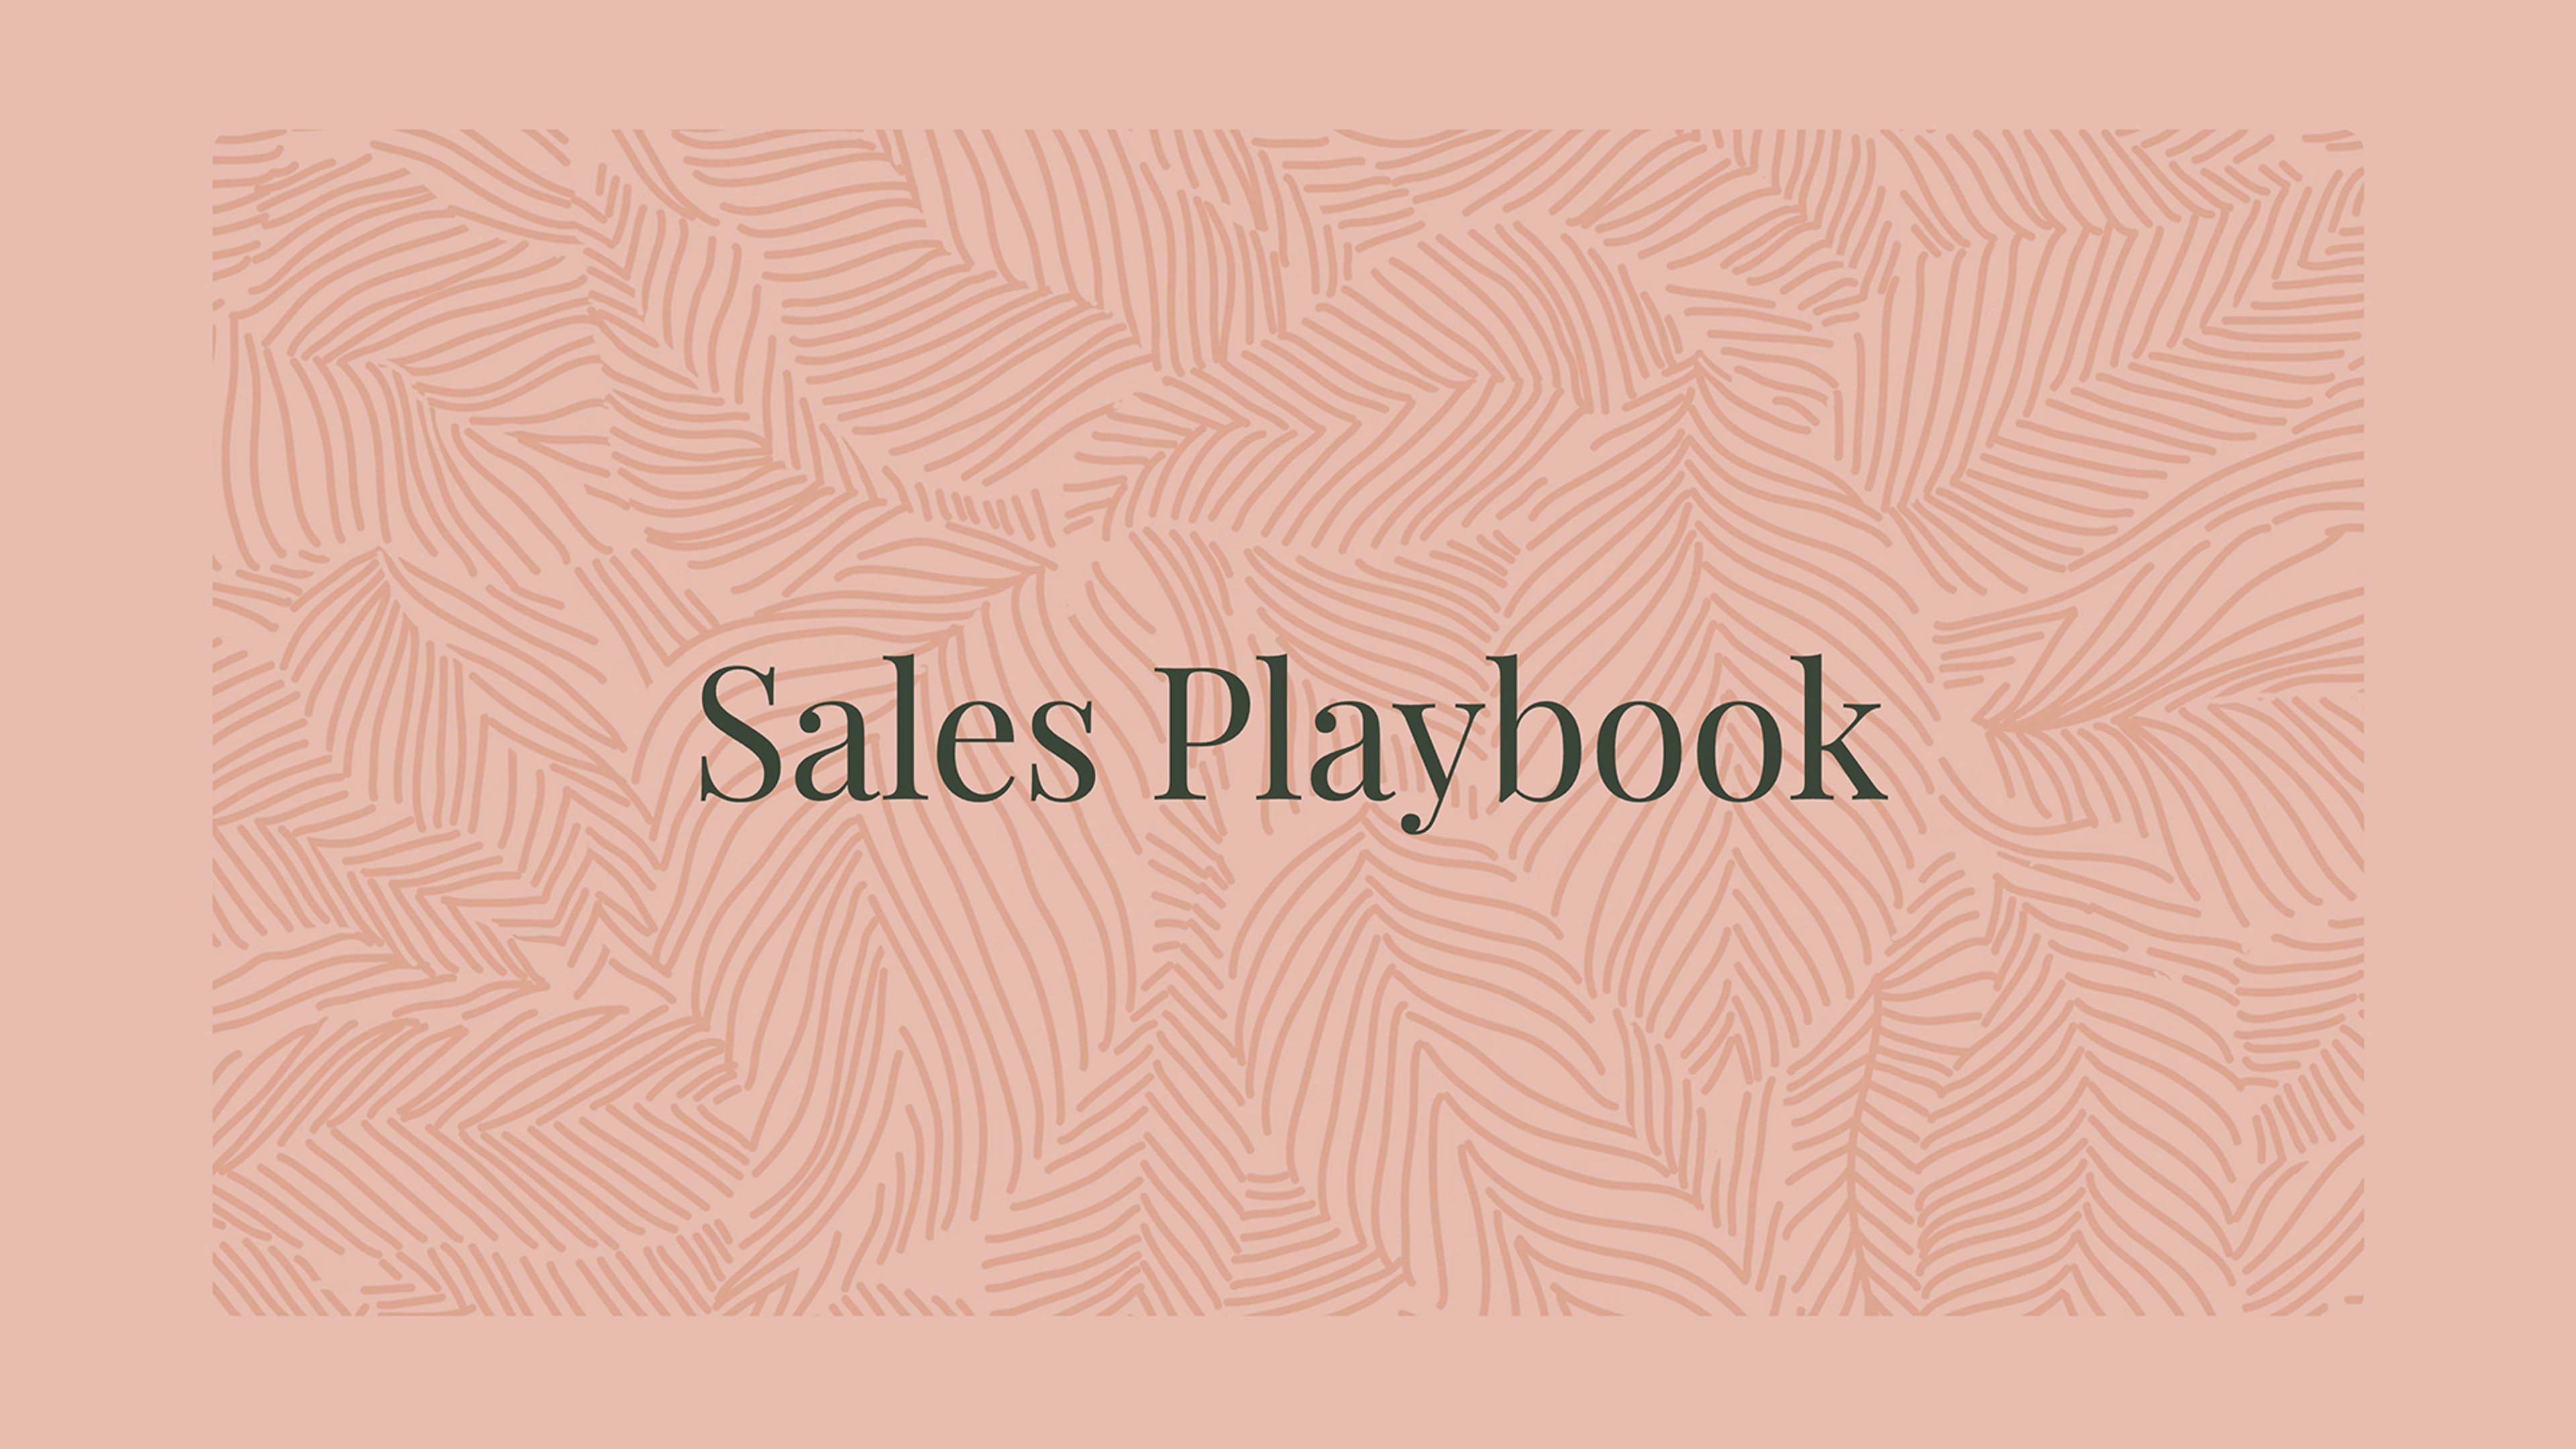 Sales Playbook - Title